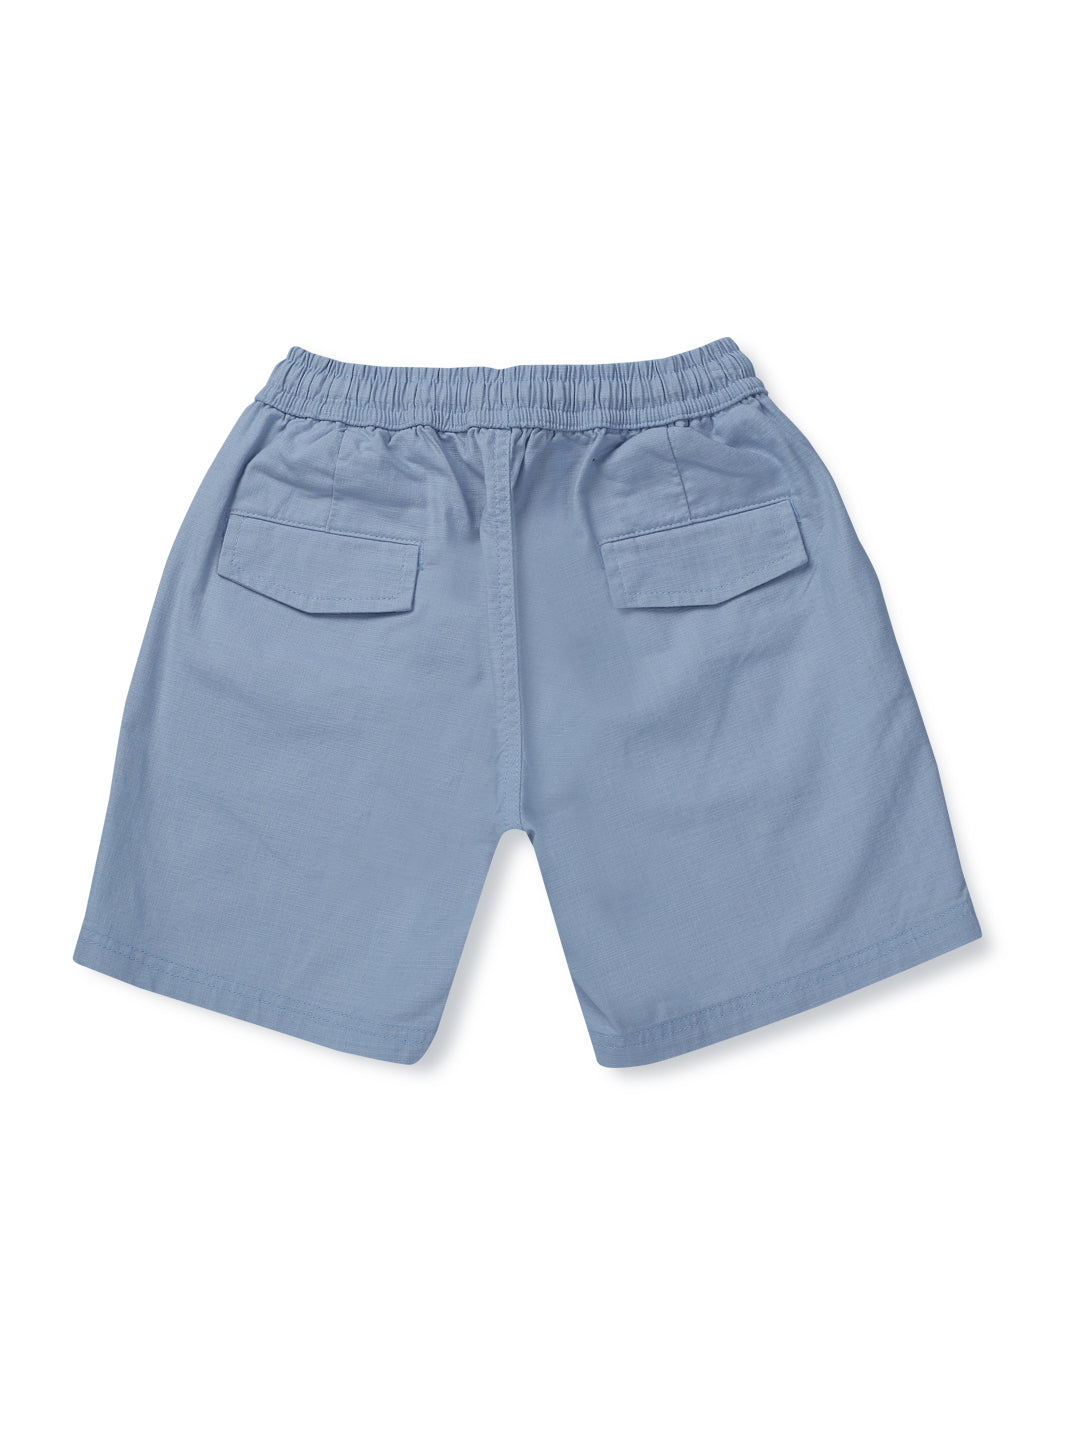 Boys Blue Cotton Solid Shorts